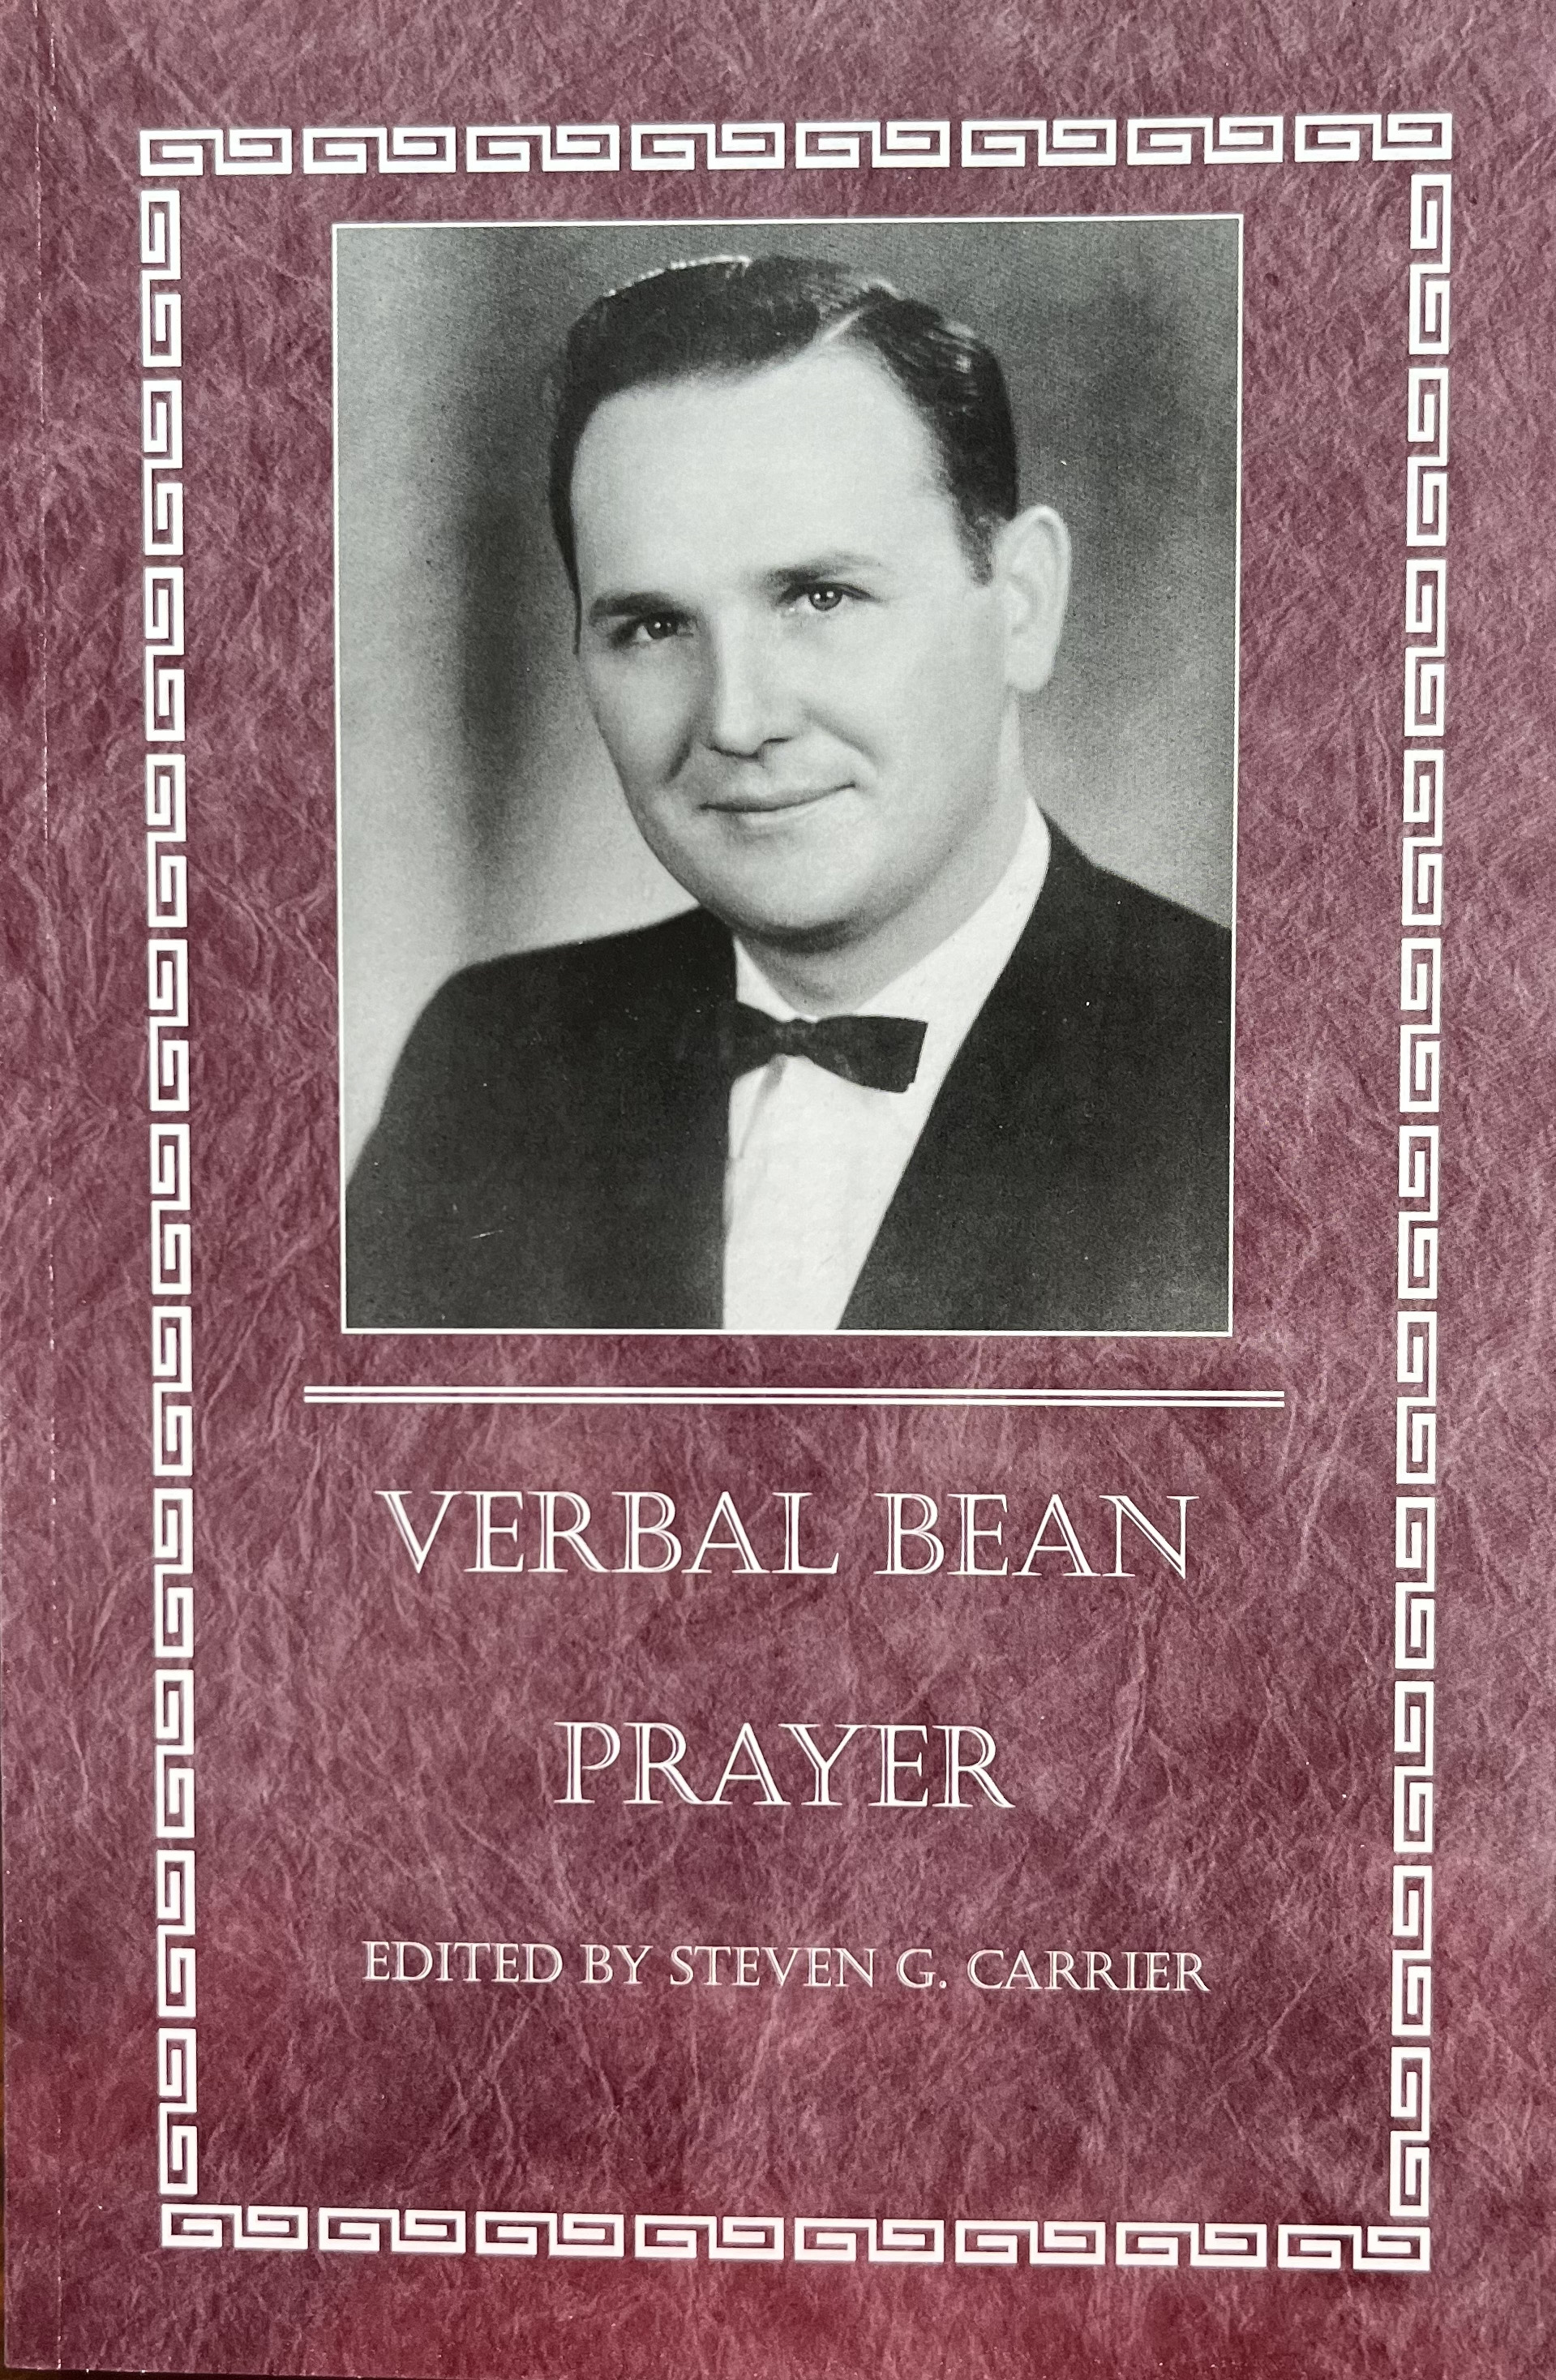 Prayer by Verbal Bean - Steven Carrier